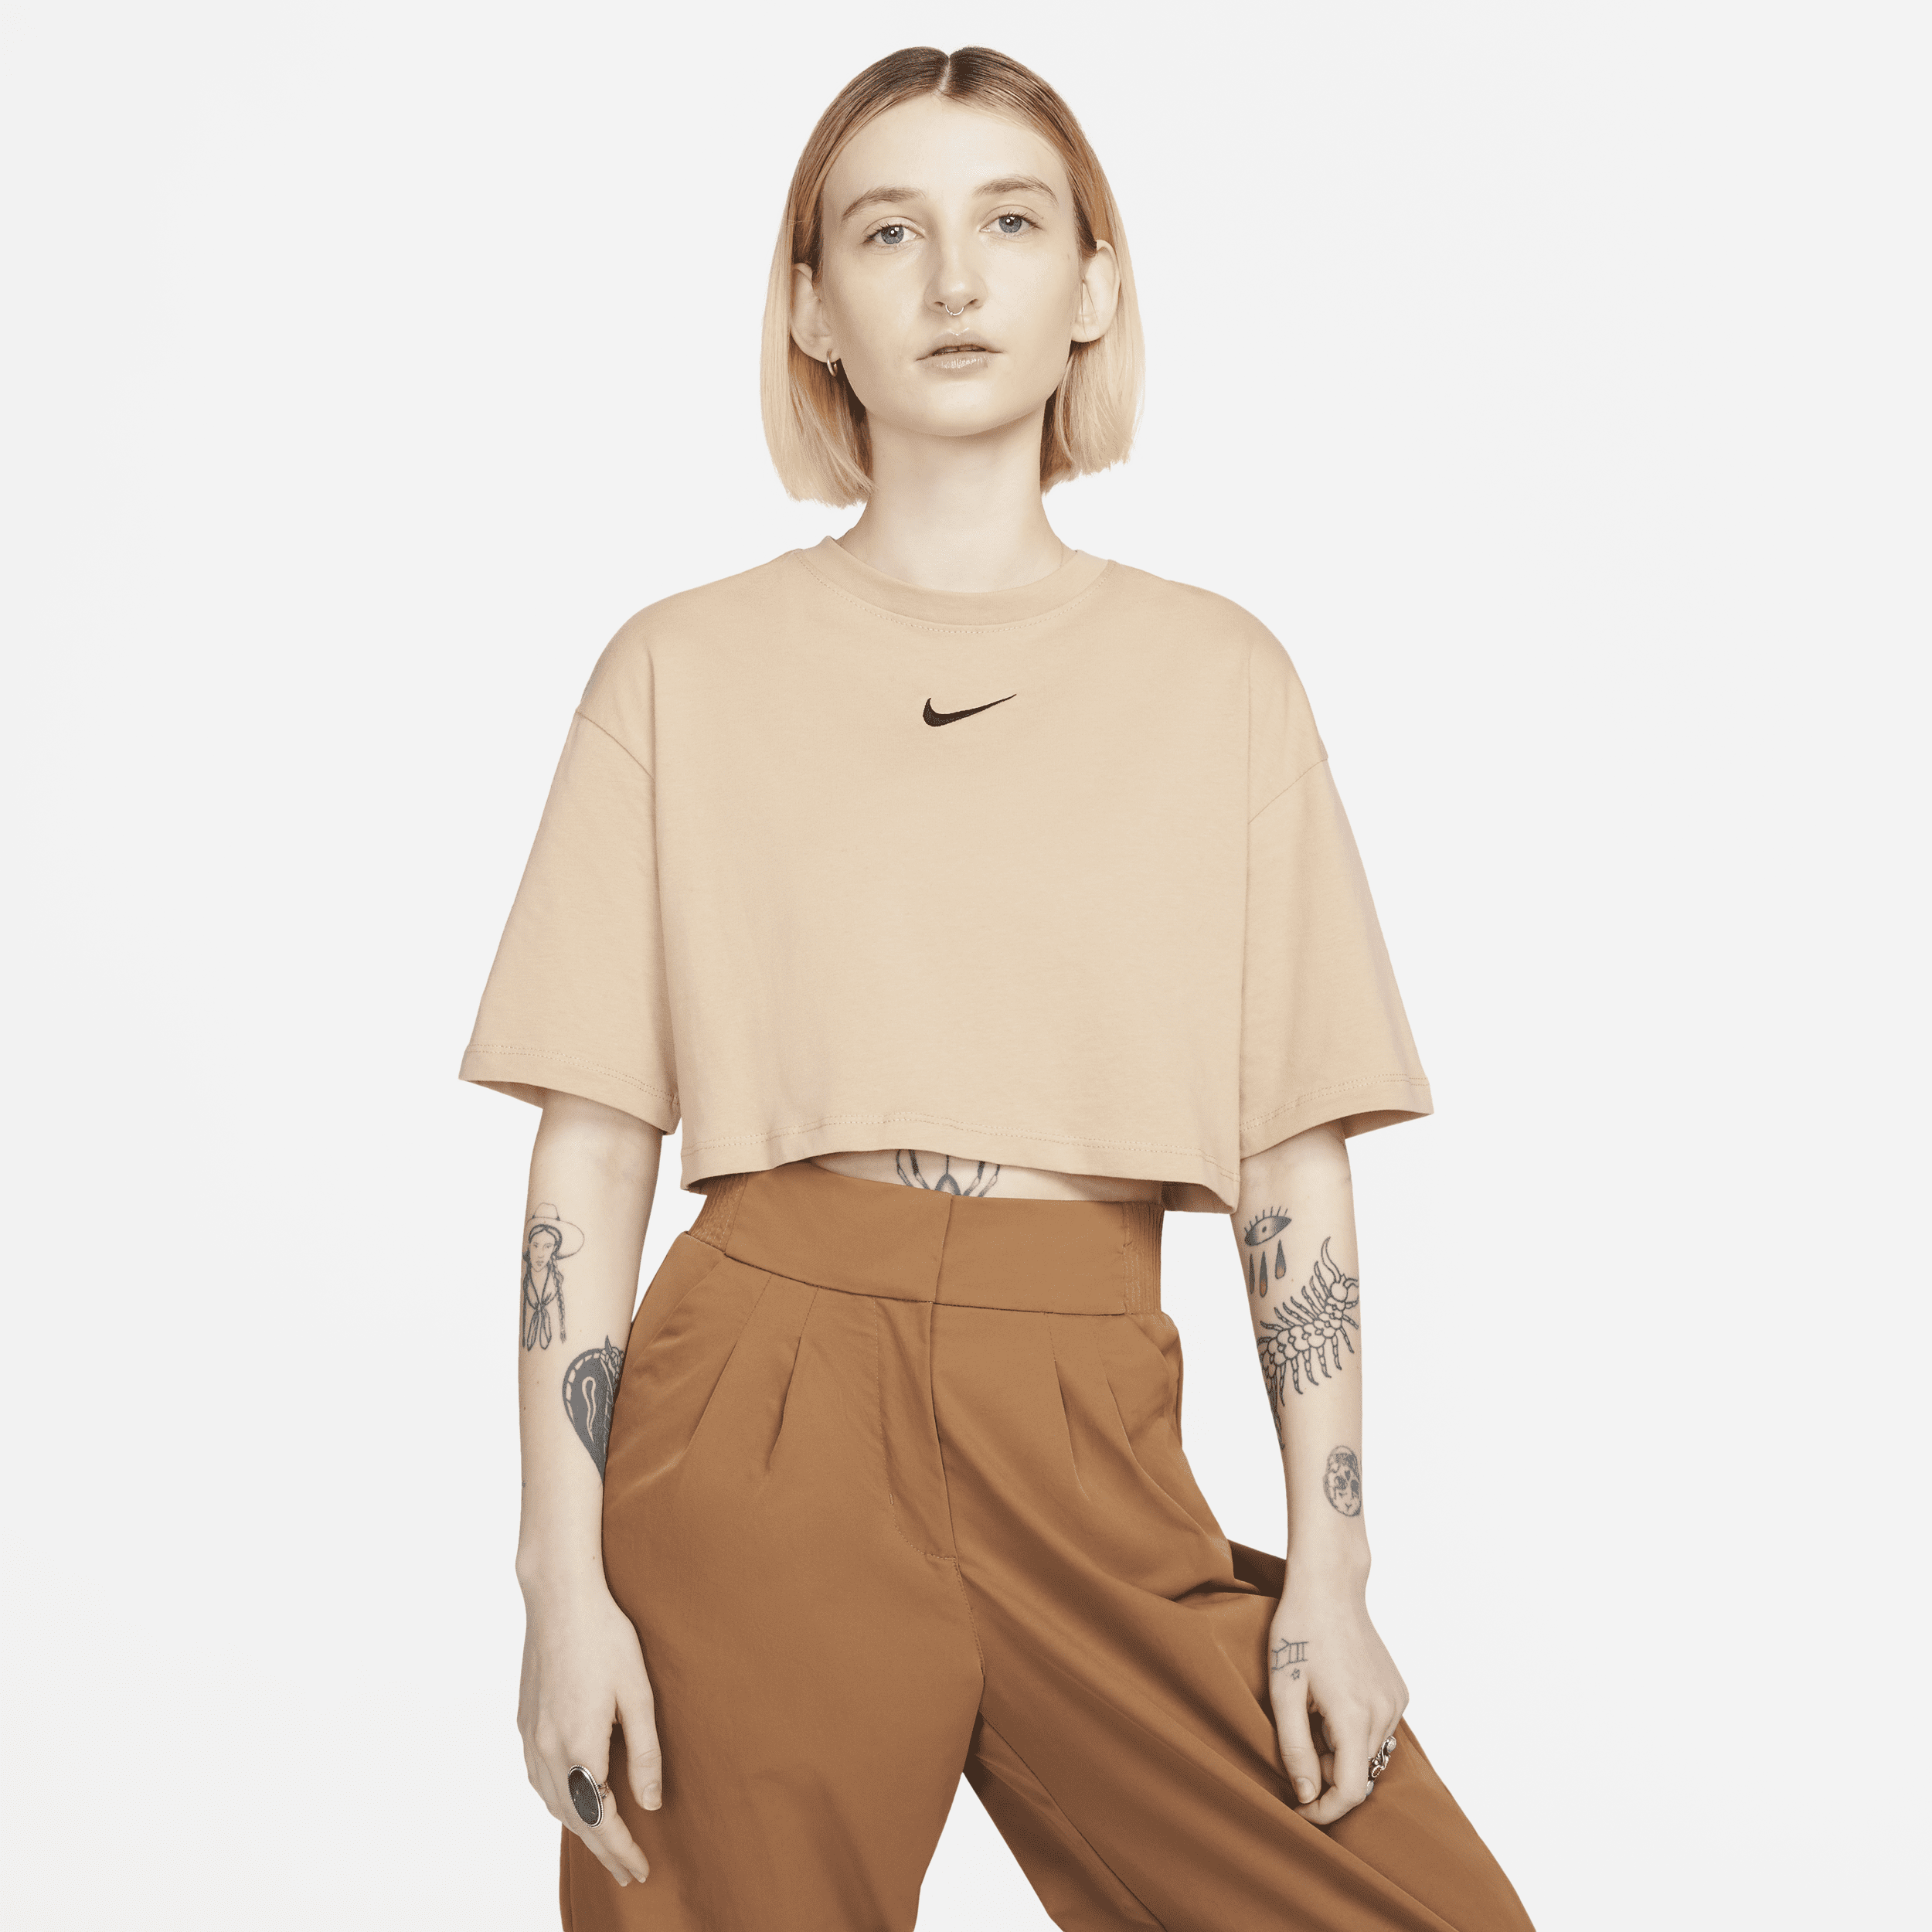 Kort Nike Sportswear-T-shirt til kvinder - brun